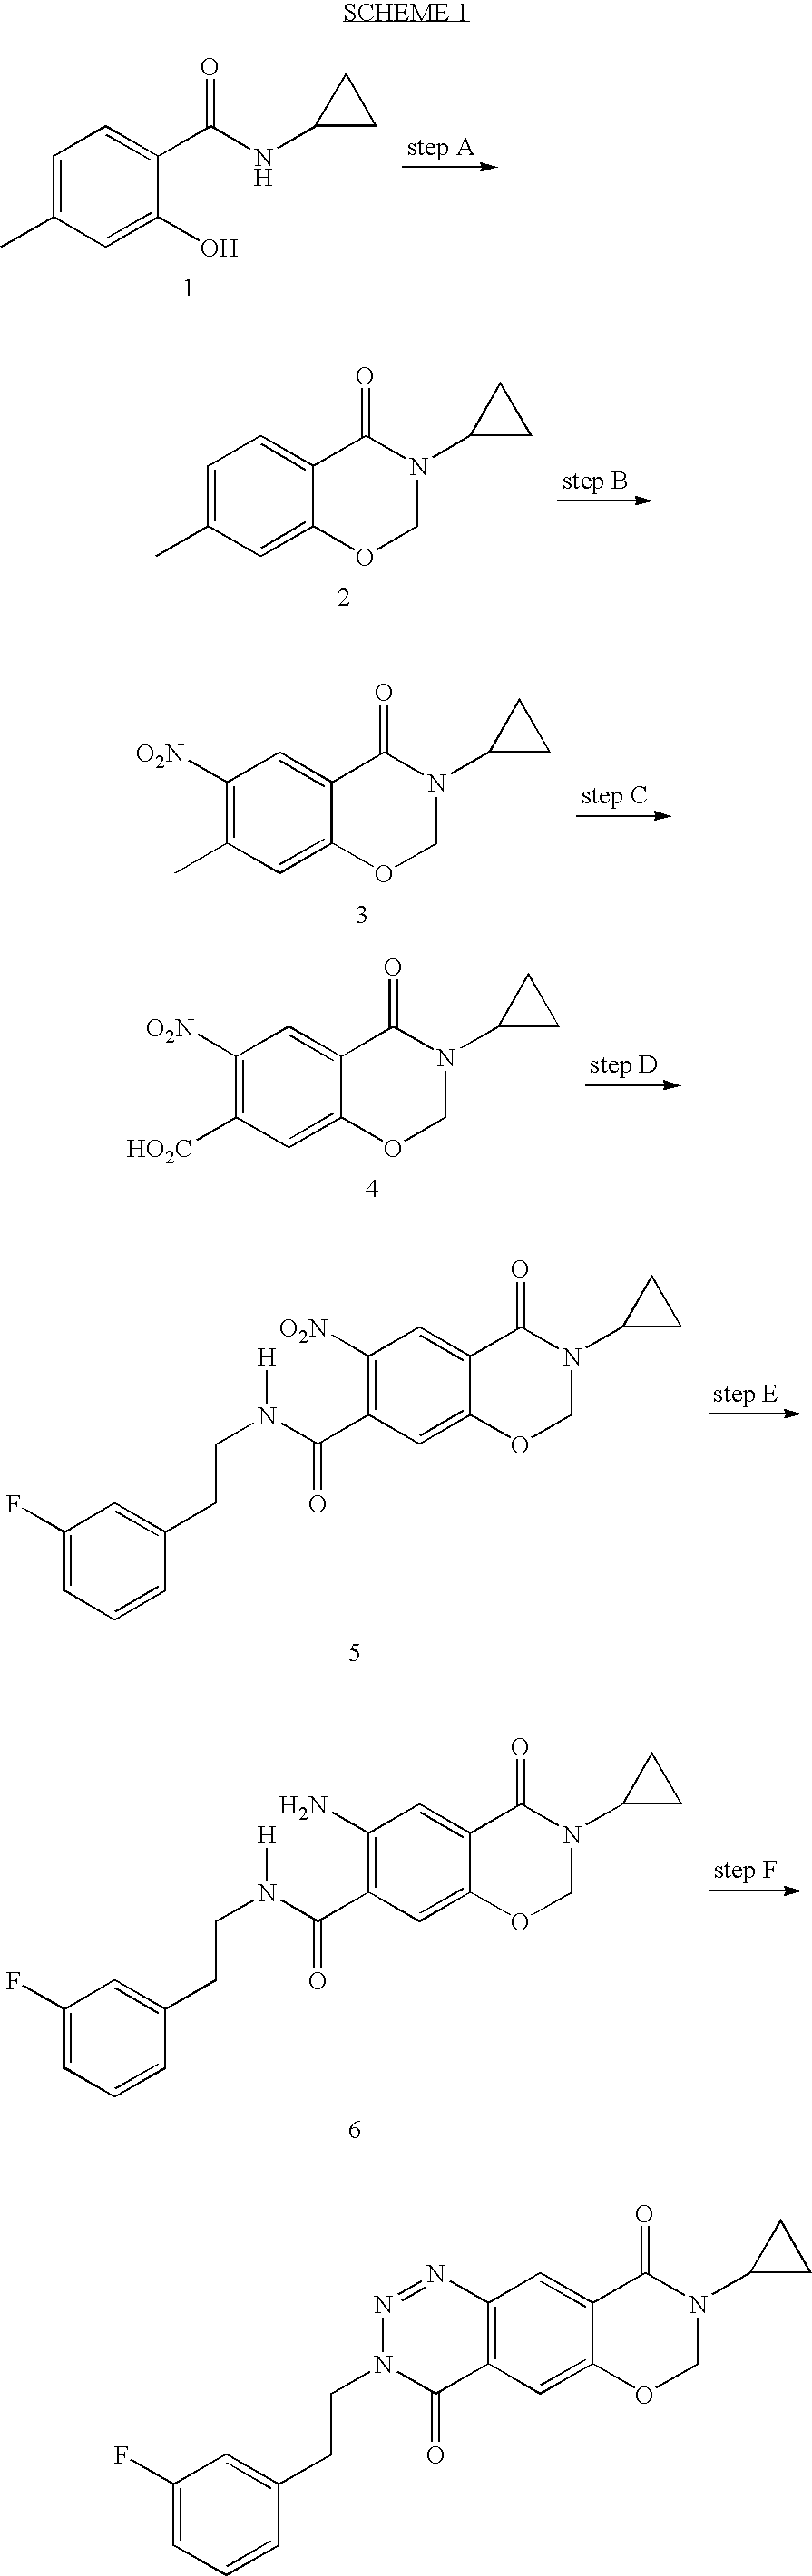 3-substituted-[1,2,3]-benzotriazinone compound for enhancing glutamatergic synaptic responses